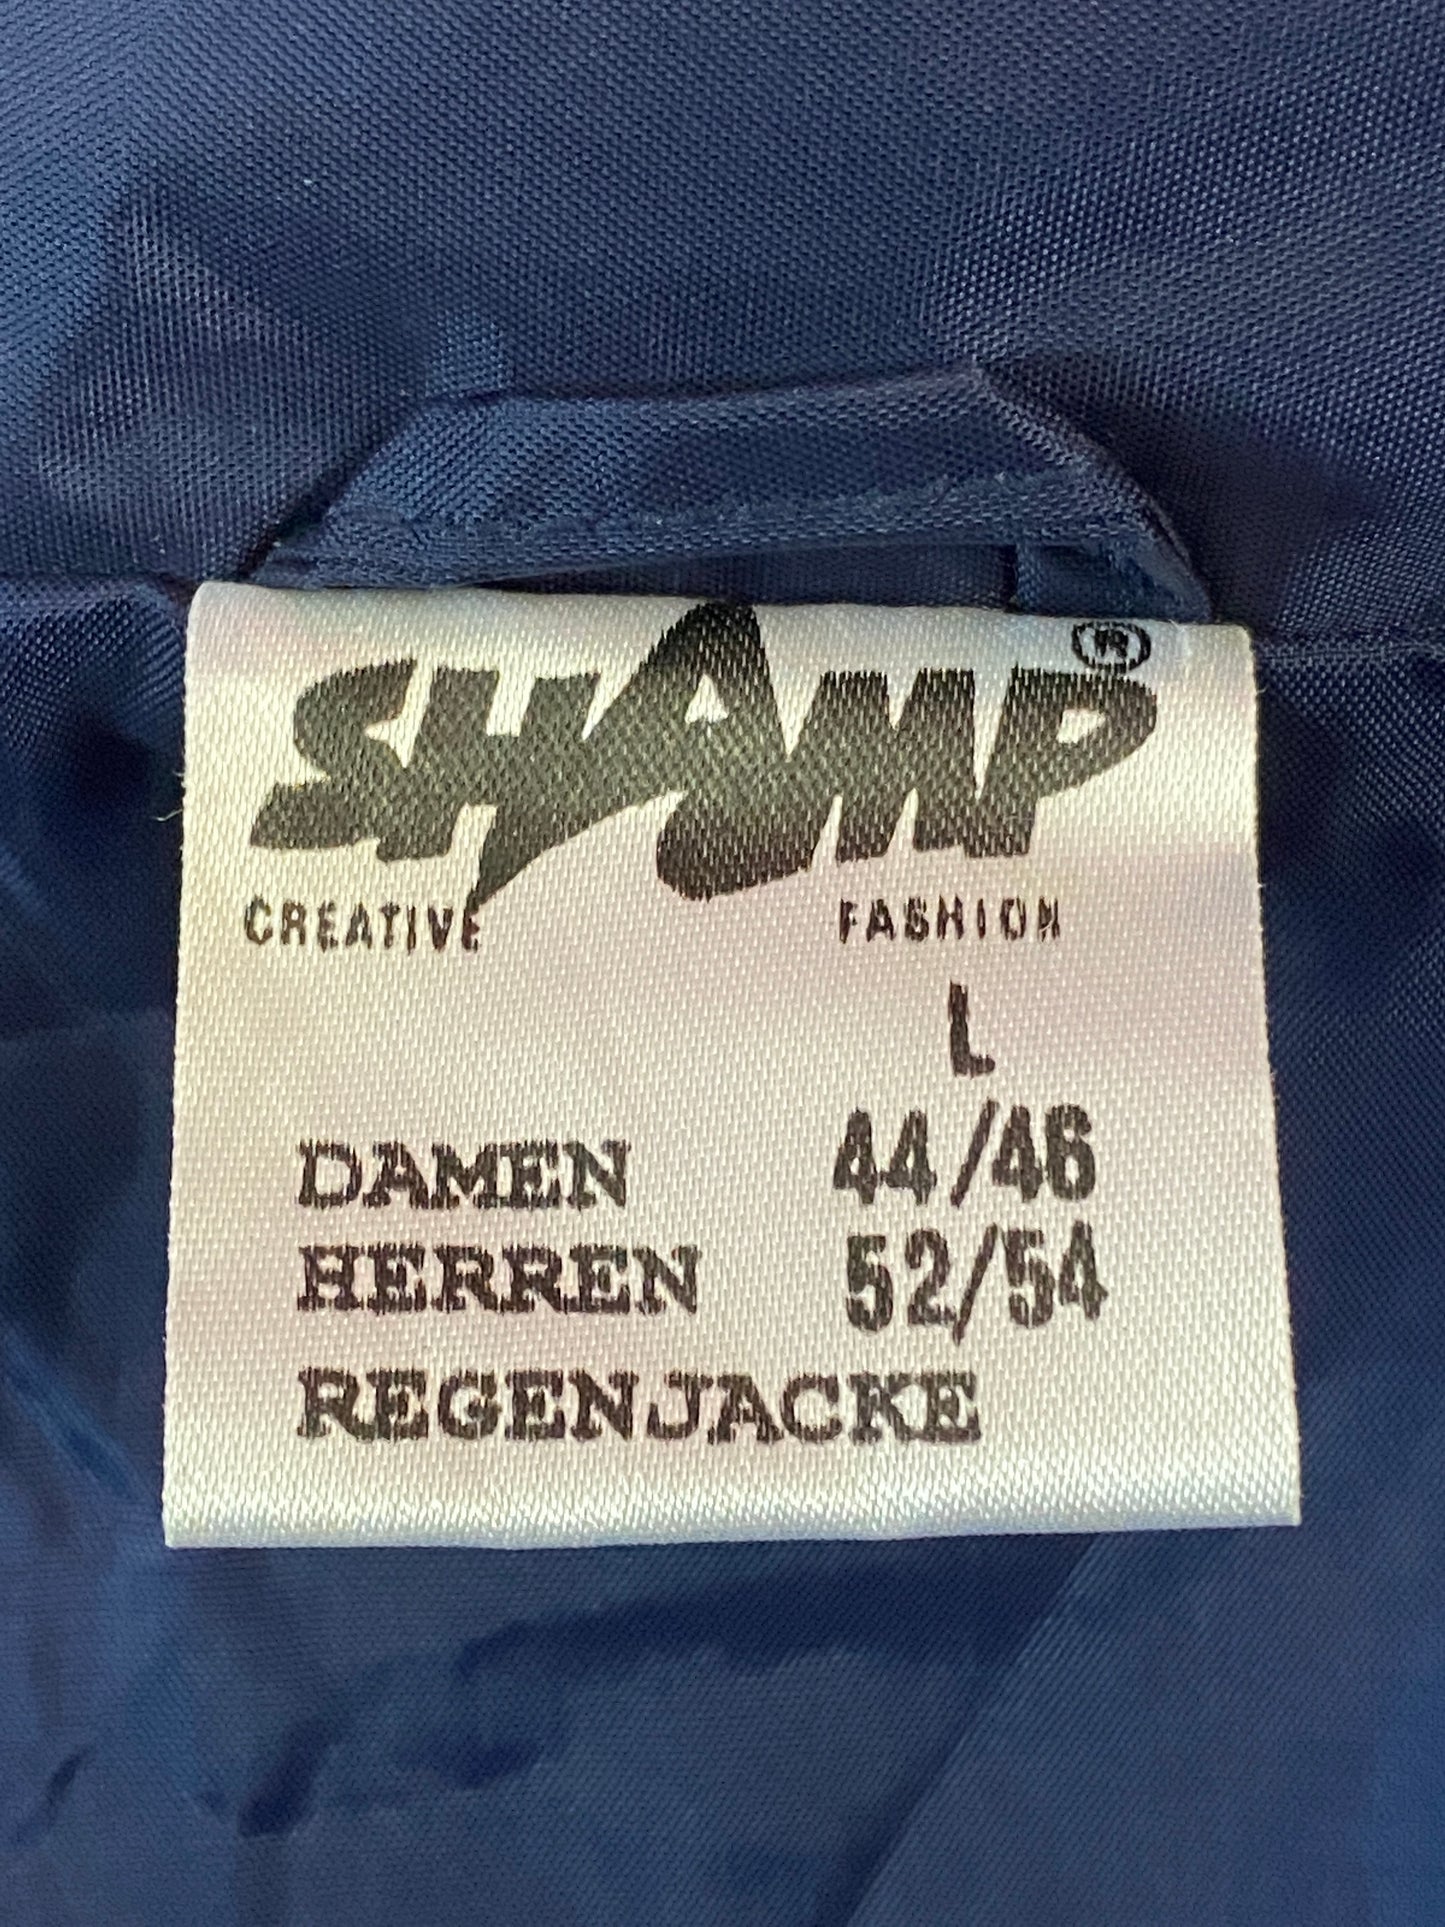 Shamp Vintage Men's Raincoat - Large Multicolor Nylon